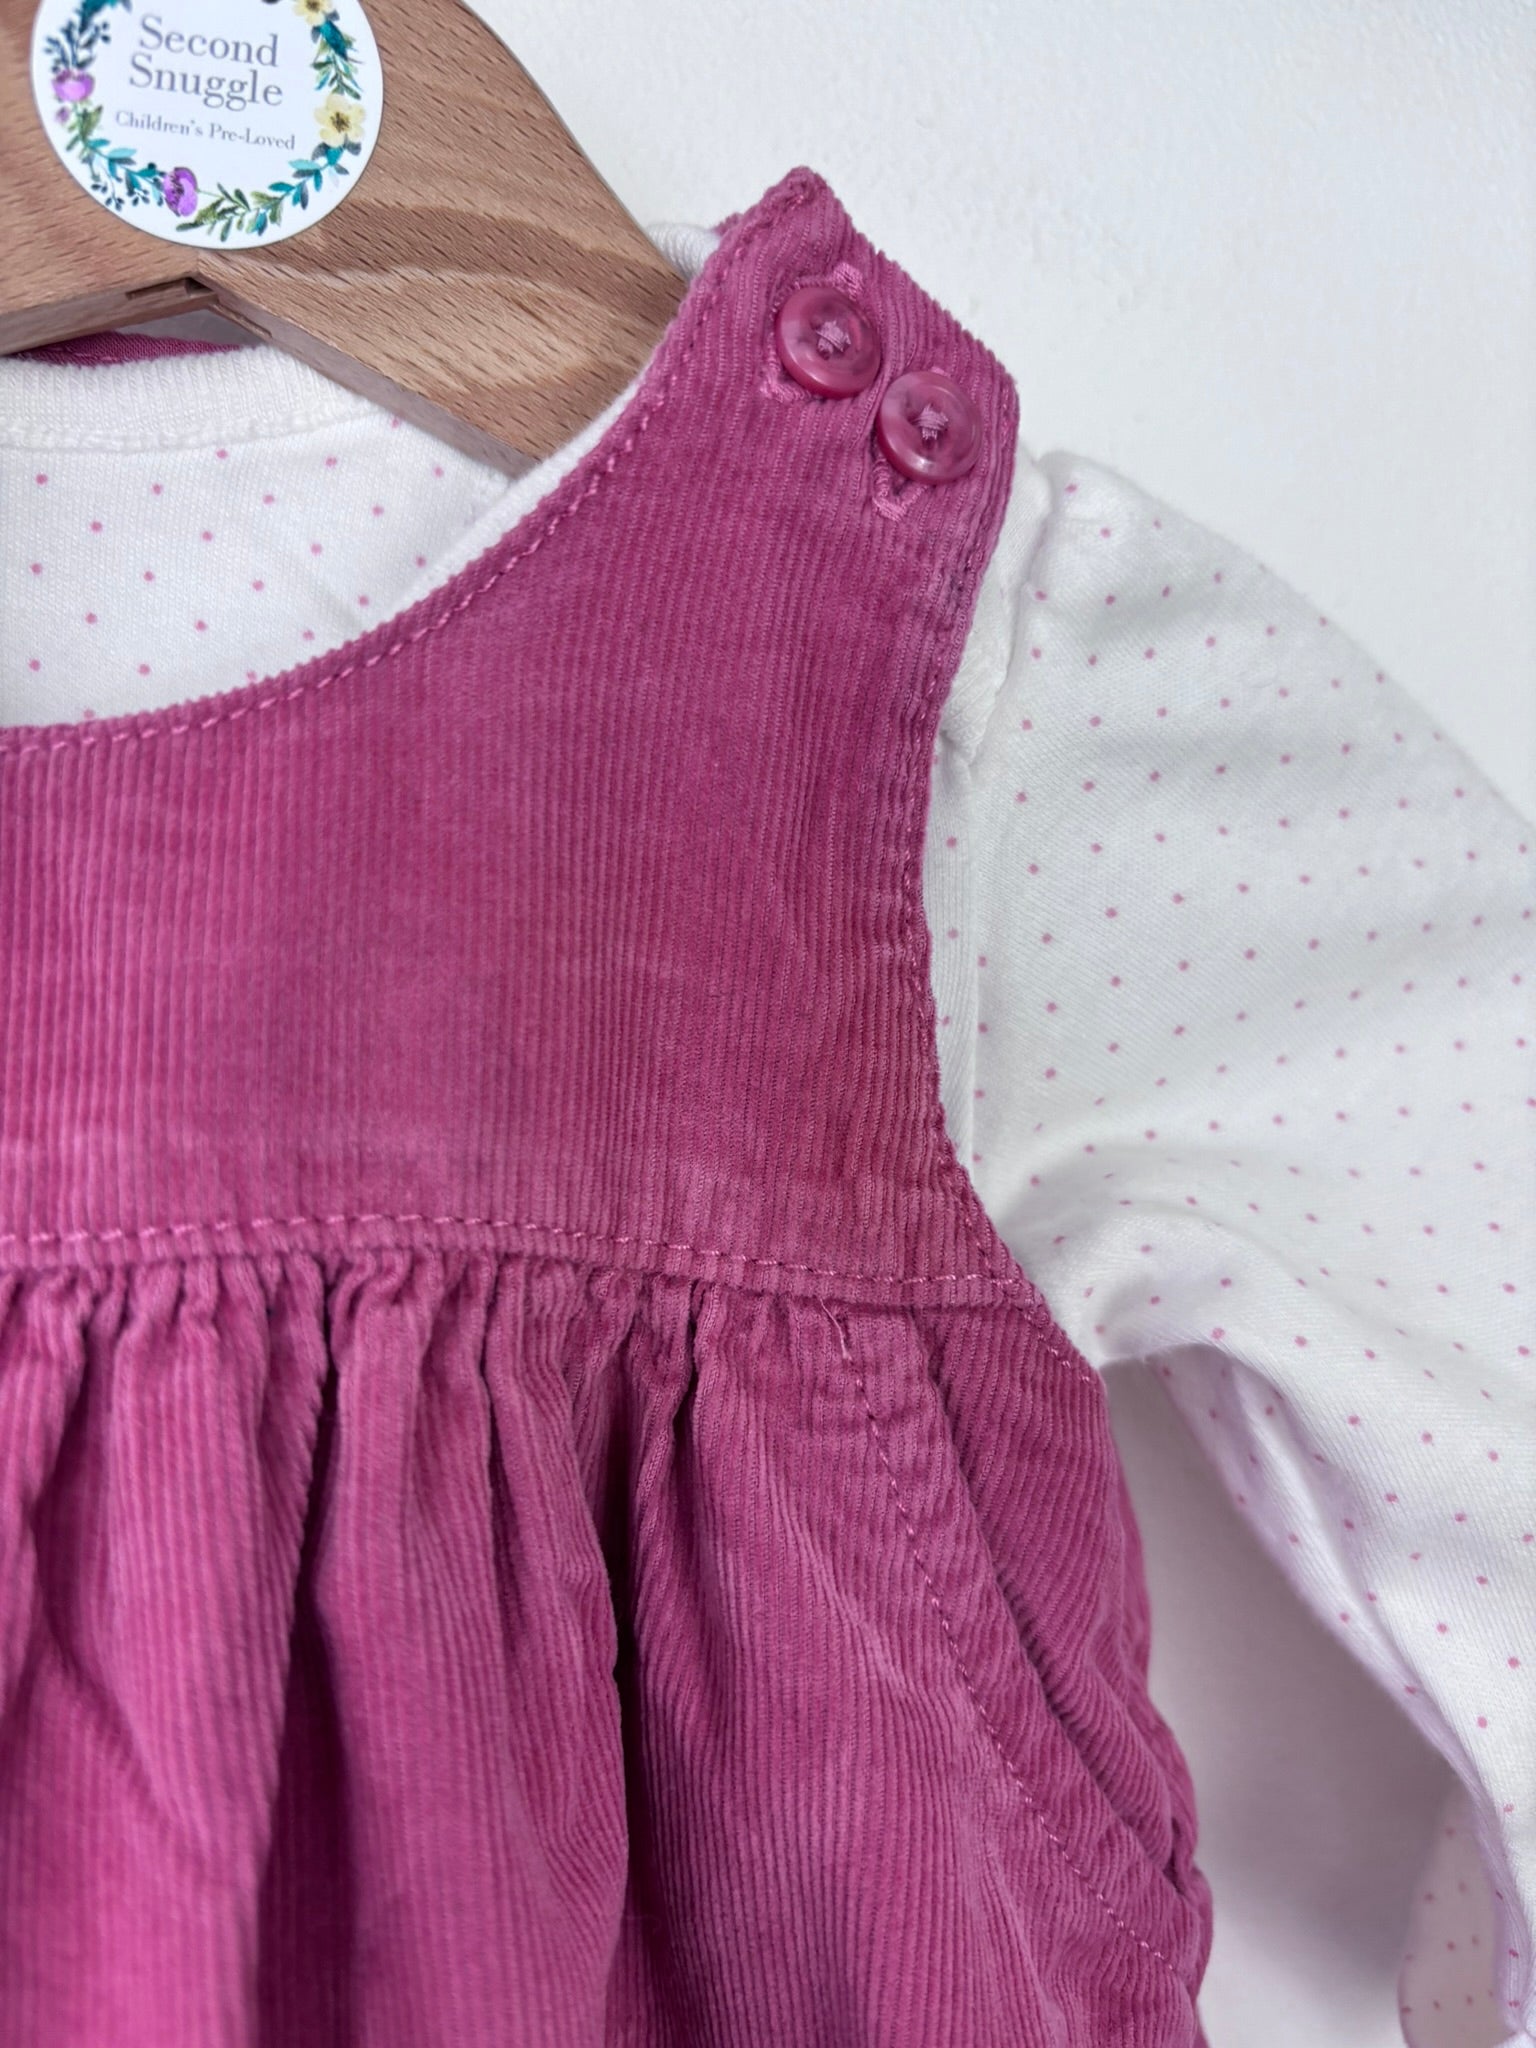 M&S 0-3 Months-Dresses-Second Snuggle Preloved